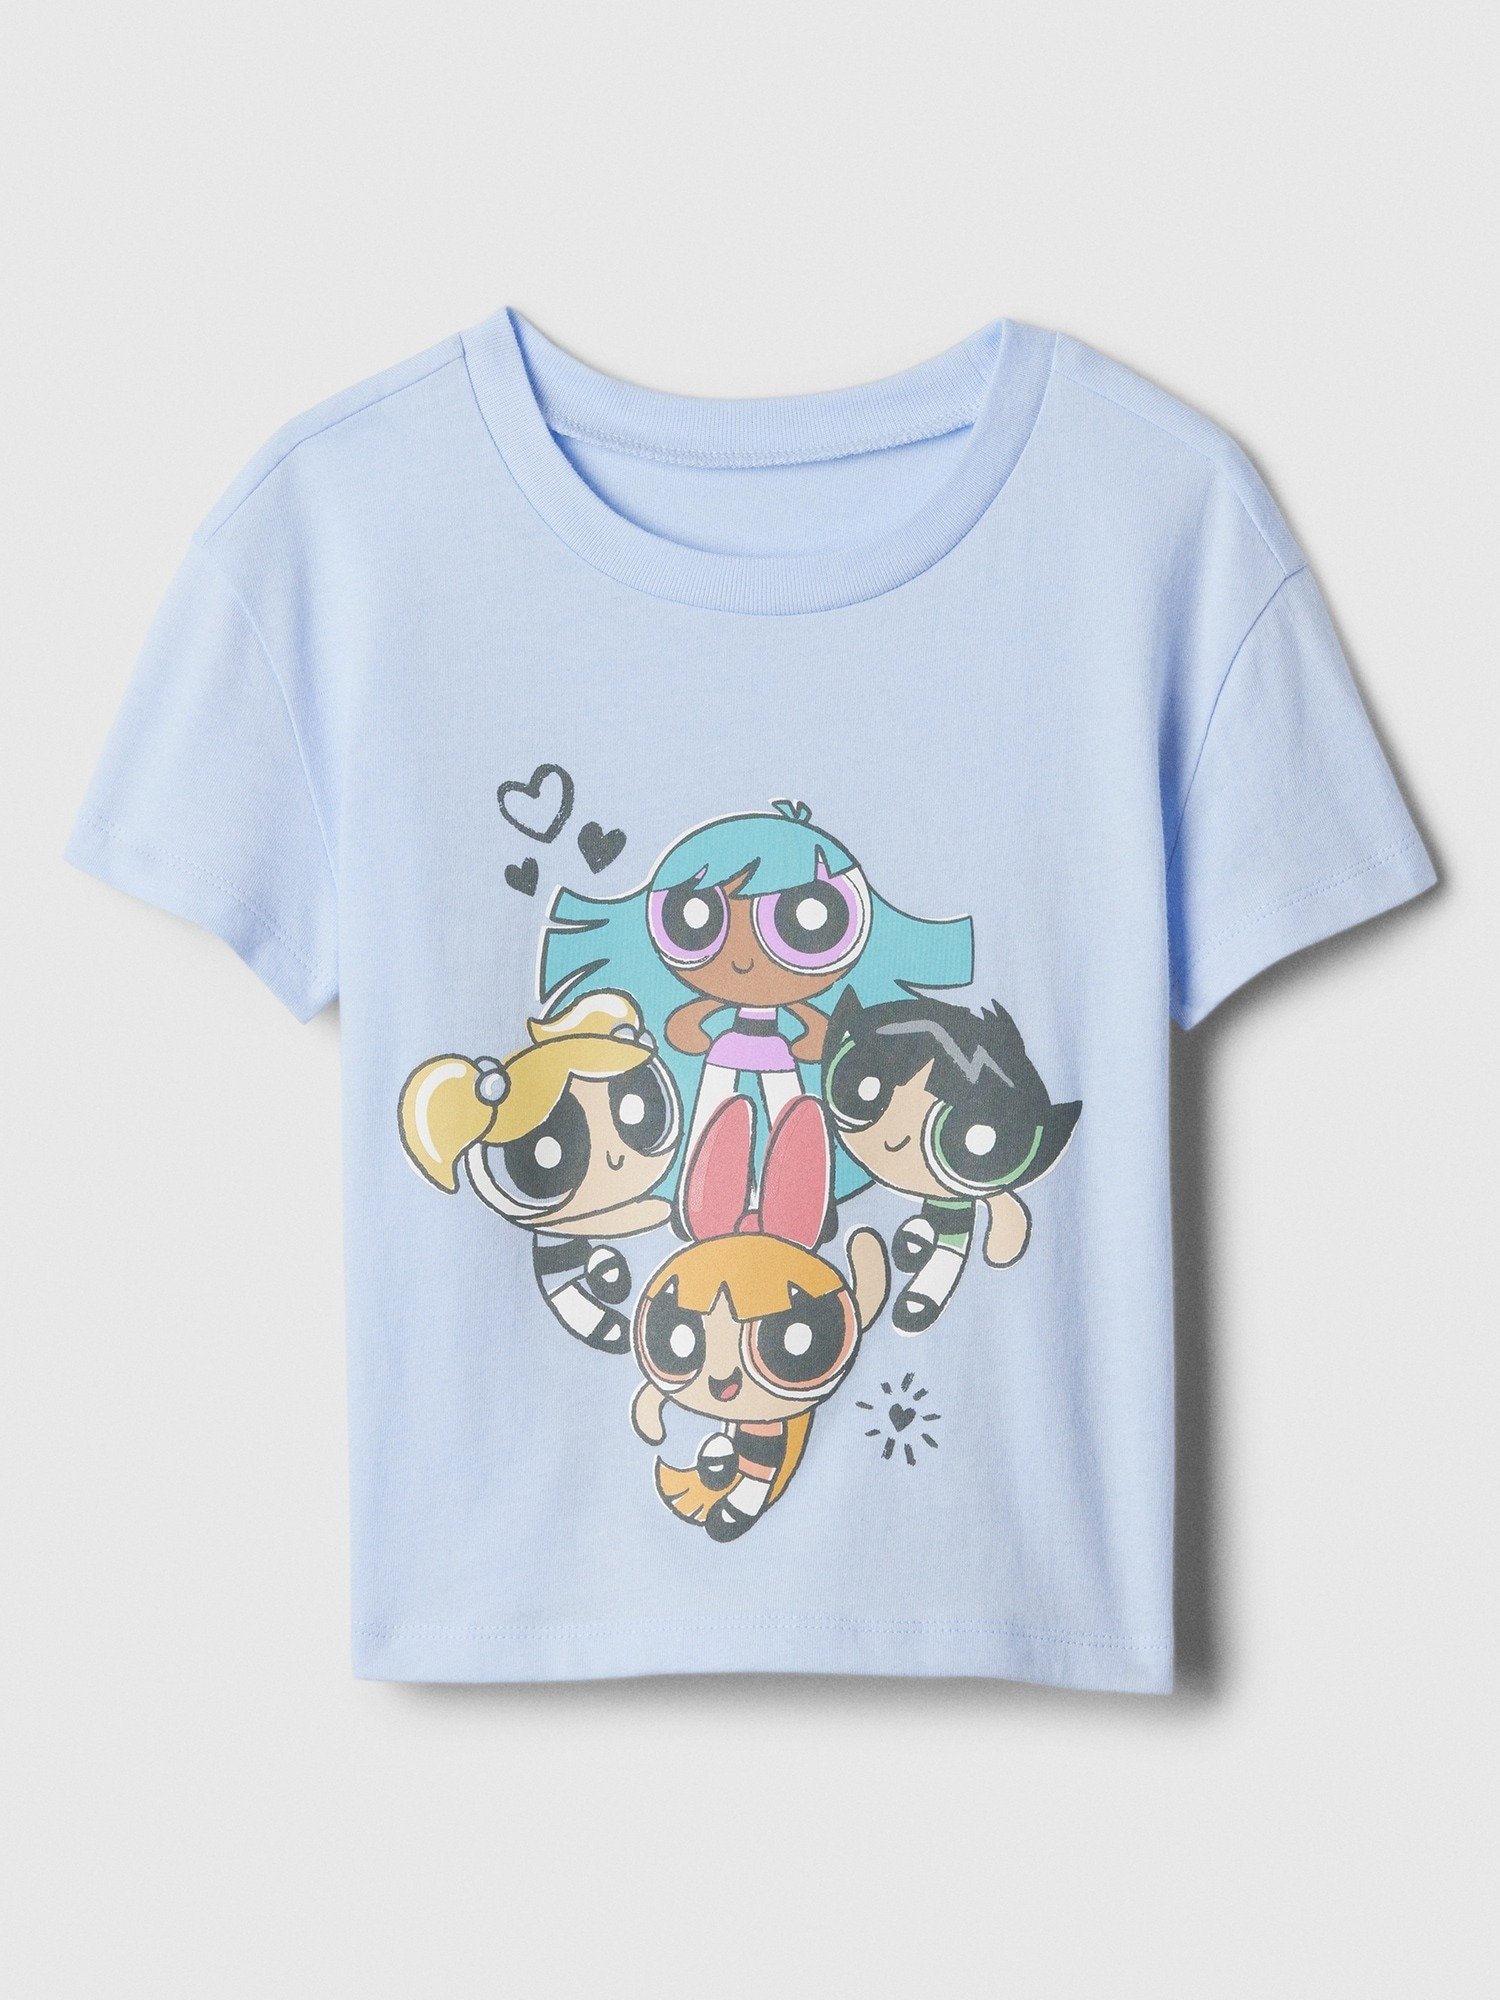 WB:trade_mark: The Powerpuff Girls Grafikli T-Shirt product image